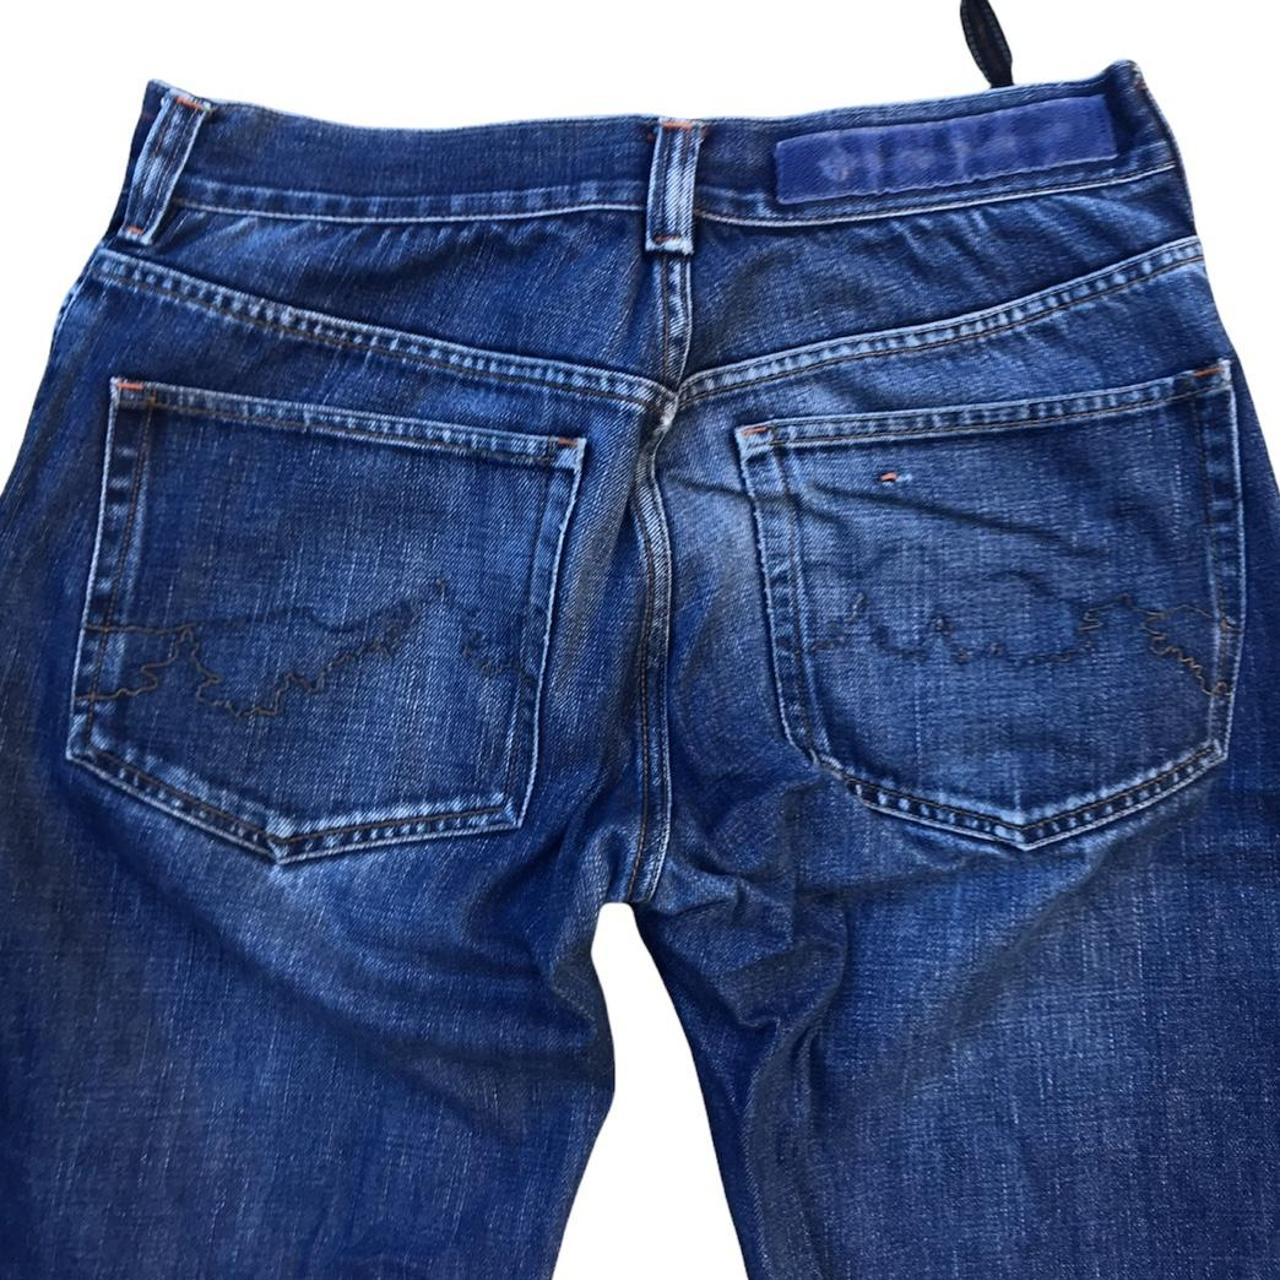 Maharishi denim jeans Dragon embroidered jeans W30” - Depop